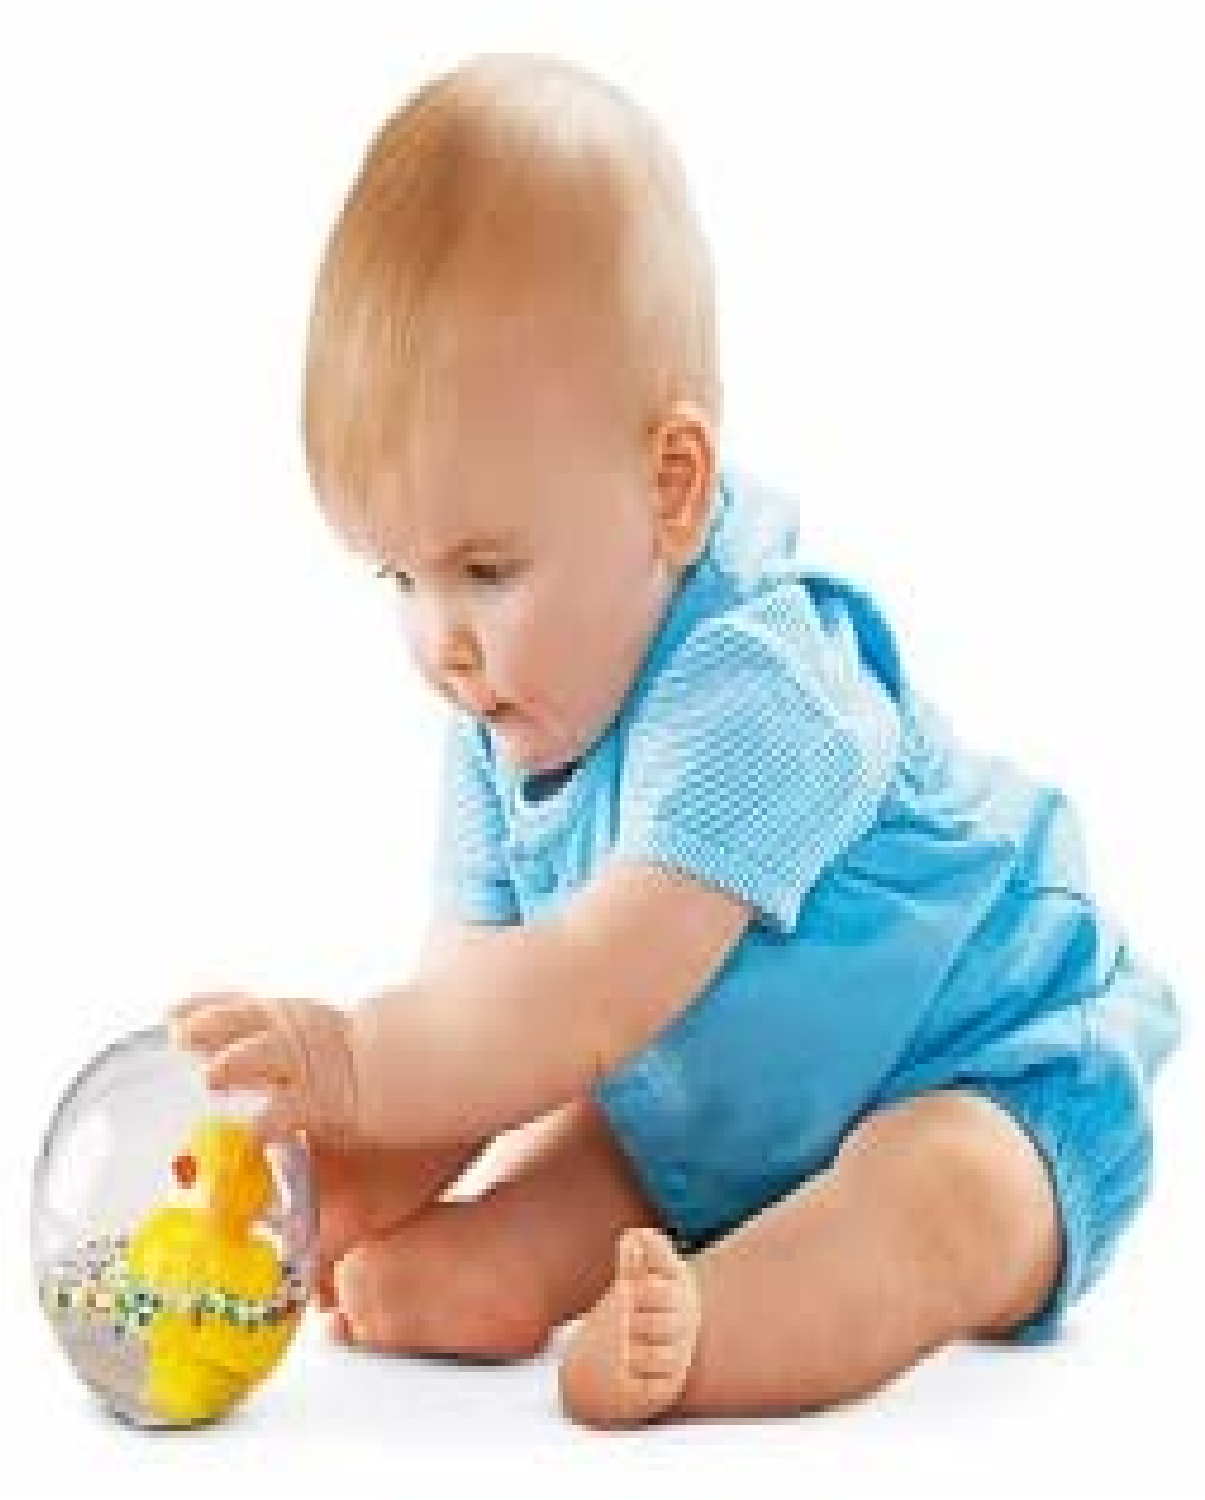 Entchenball, Babyspielzeug ab 3 Monaten Fisher-Price 75676